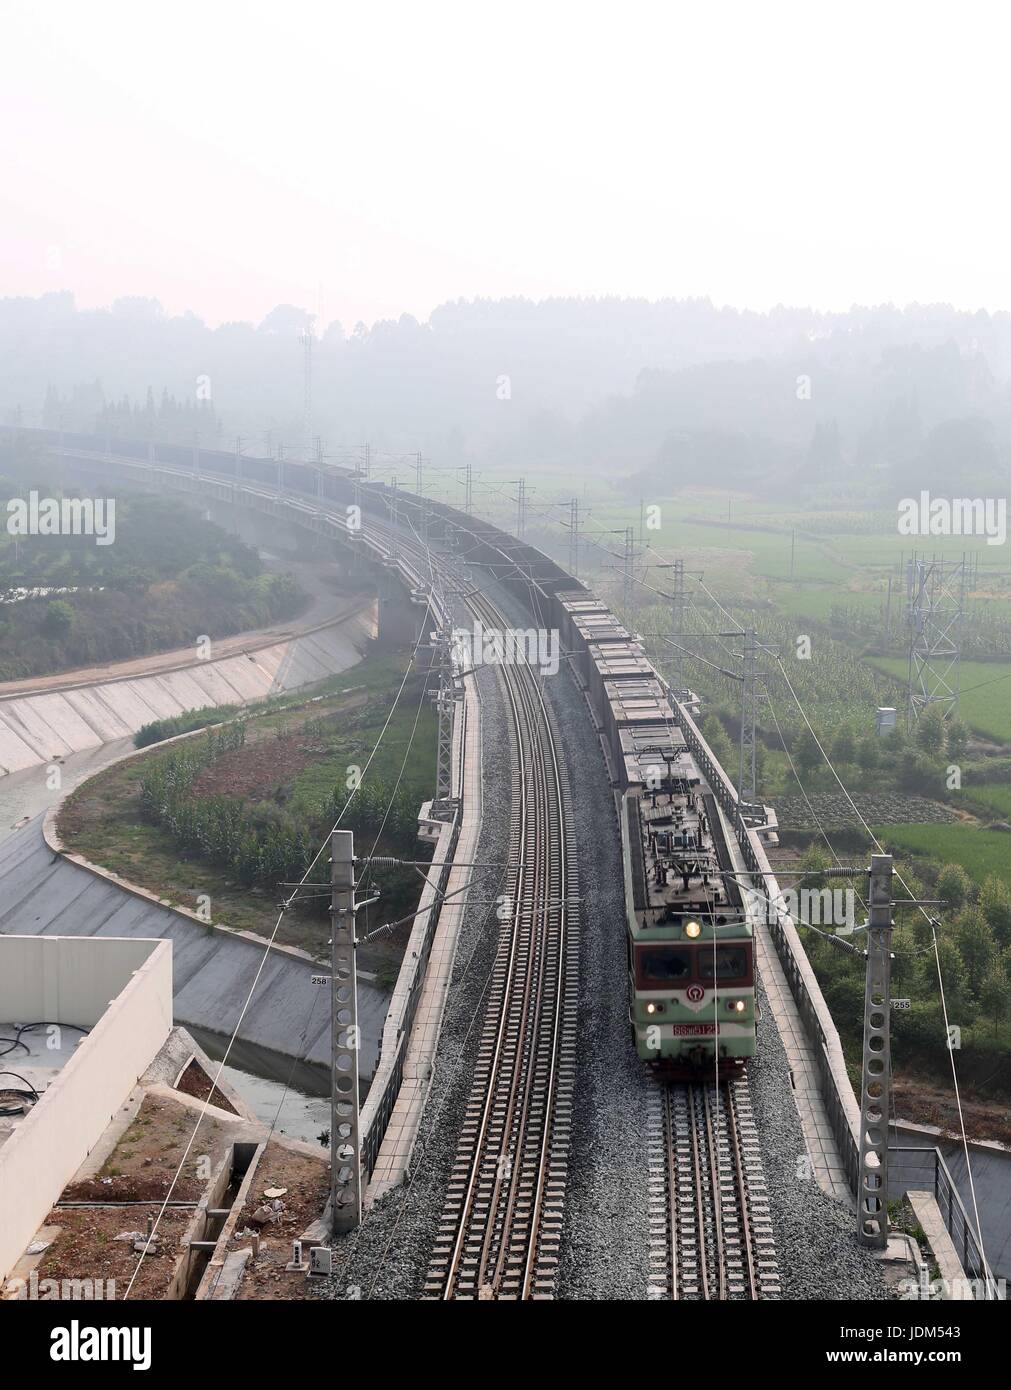 (170621) -- CHENGDU, June 21, 2017 (Xinhua) -- A train is seen in the Hualongmen to Pengshan section of the southwest China's Chengdu-Kunming Railway, June 21, 2017. The Hualongmen to Pengshan section of the double-track Chengdu-Kunming Railway opened Wednesday, a major breakthrough on the construction of the railway. (Xinhua/Kong Xiangwen)(wjq) Stock Photo